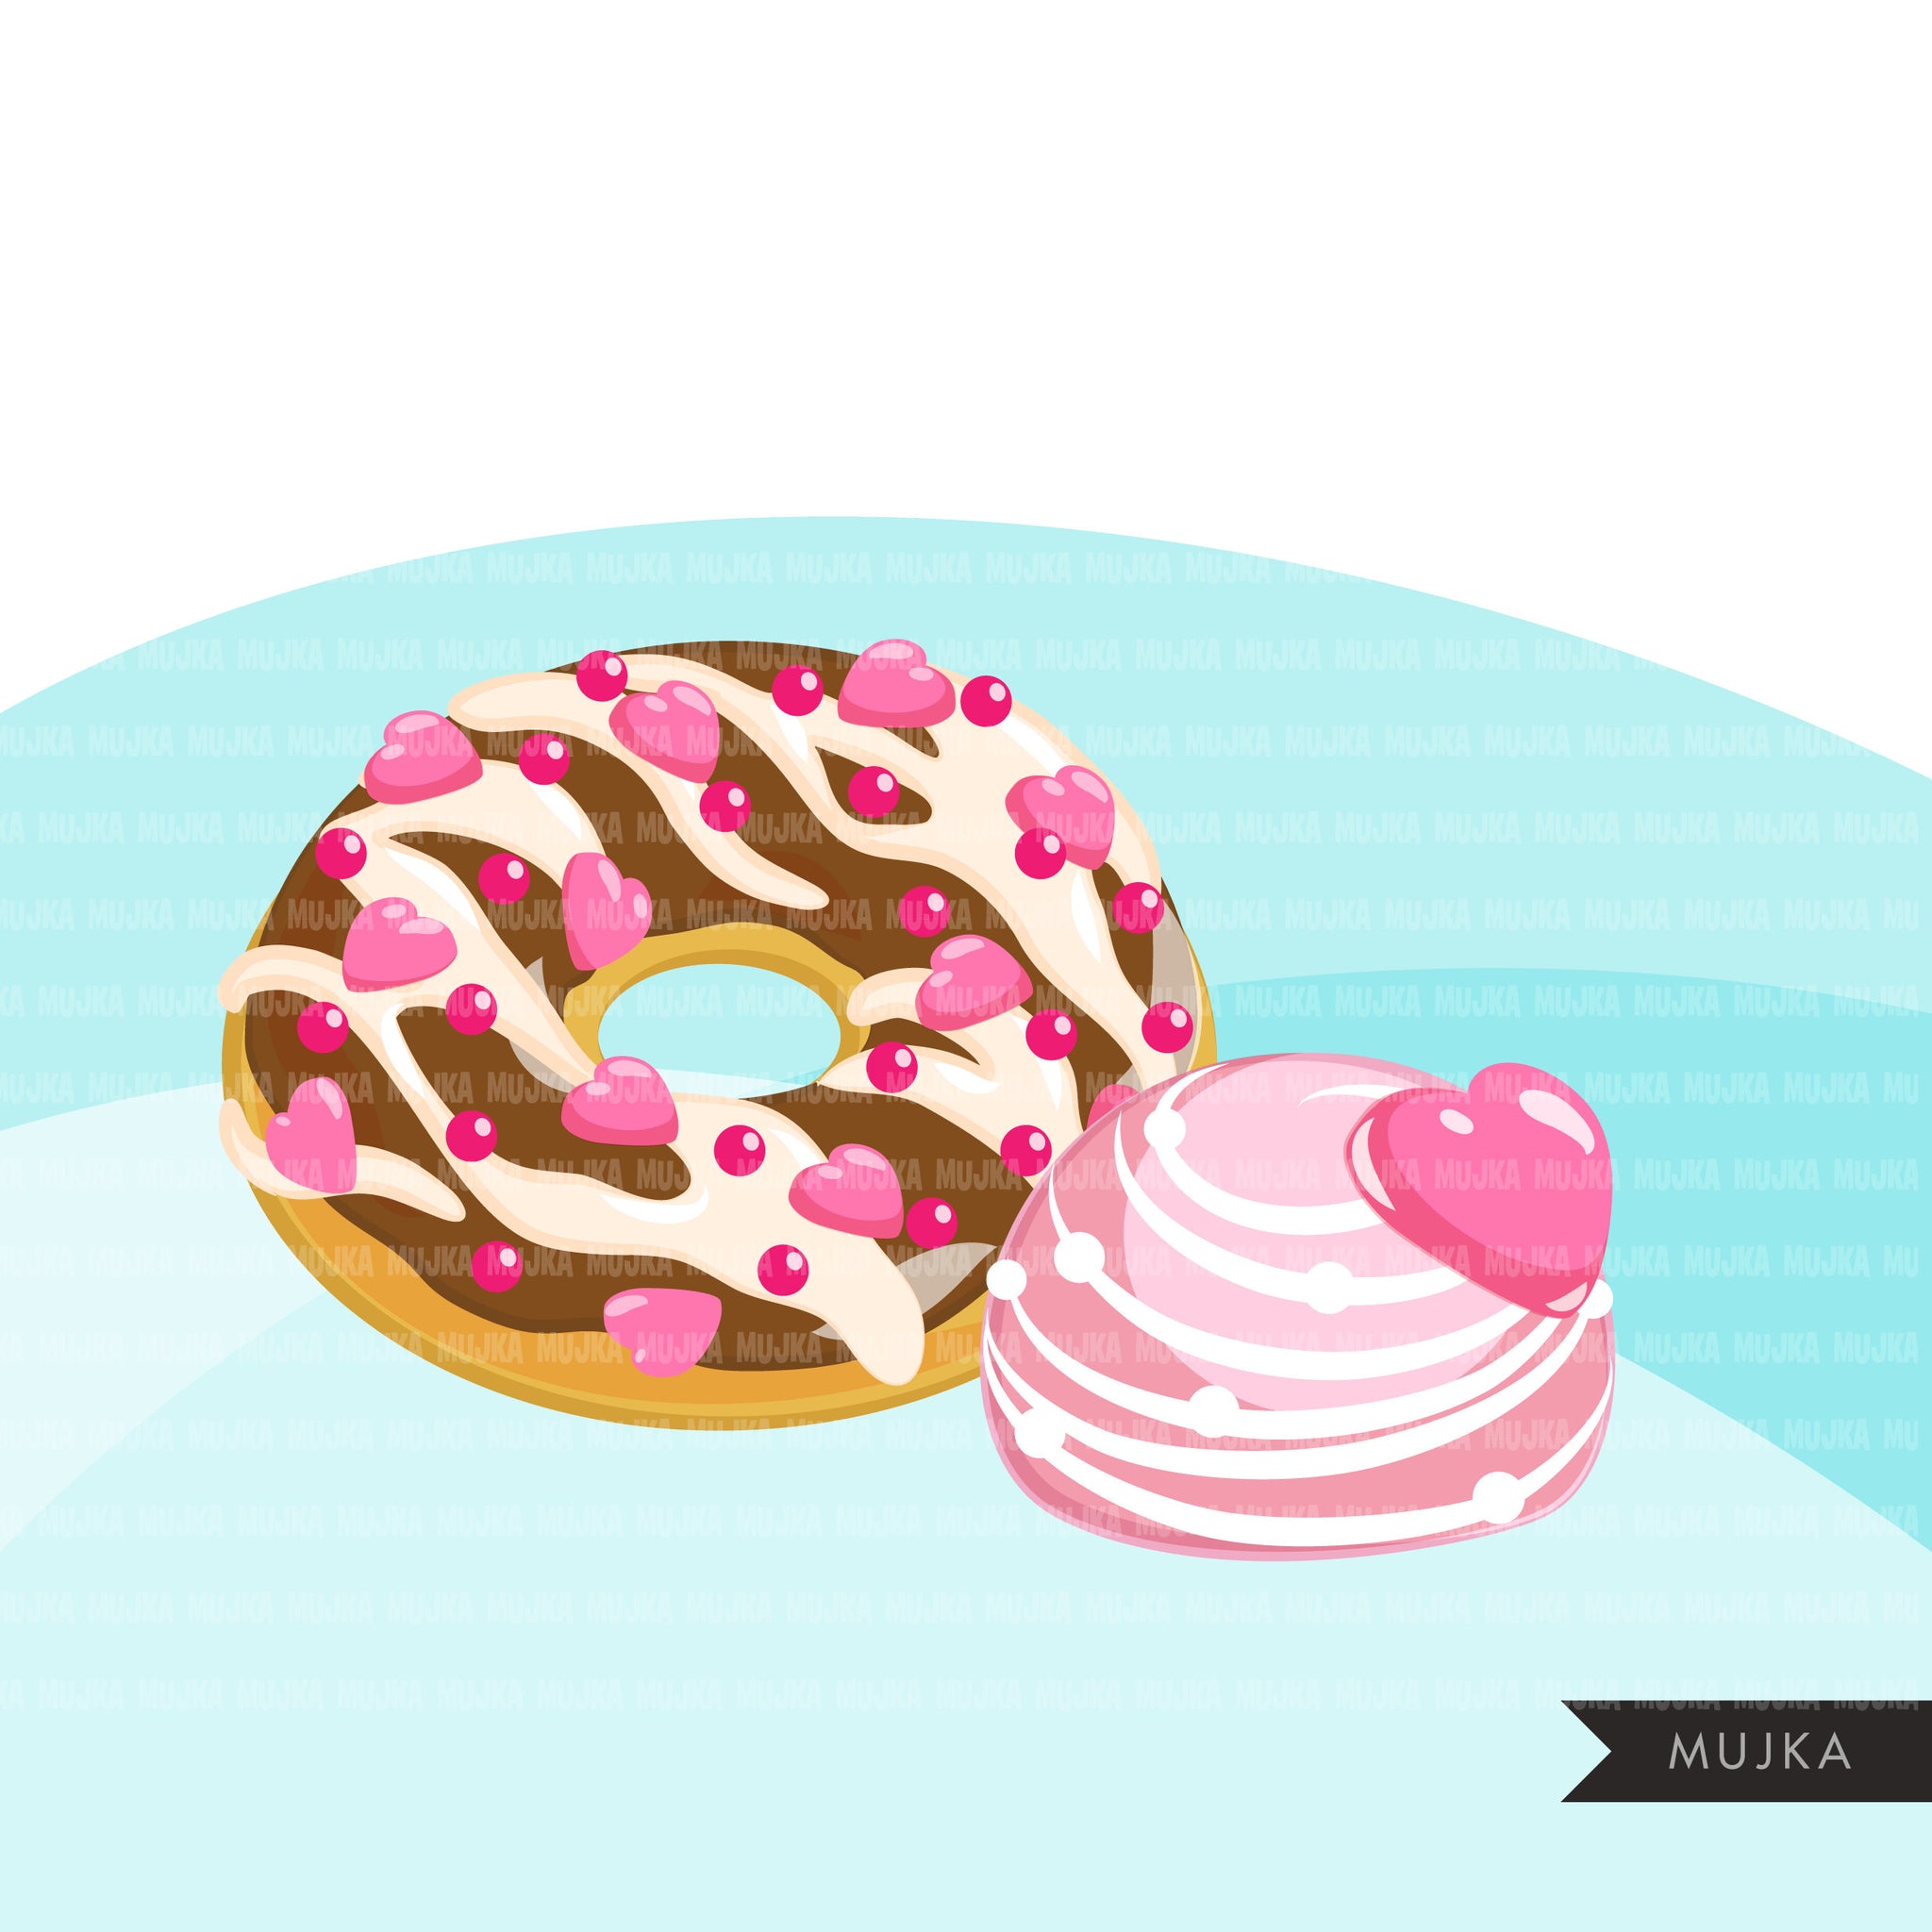 Clipart de doces do dia dos namorados, donuts, trufas, chocolate, biscoitos, biscoitos do dia dos namorados, png clip art